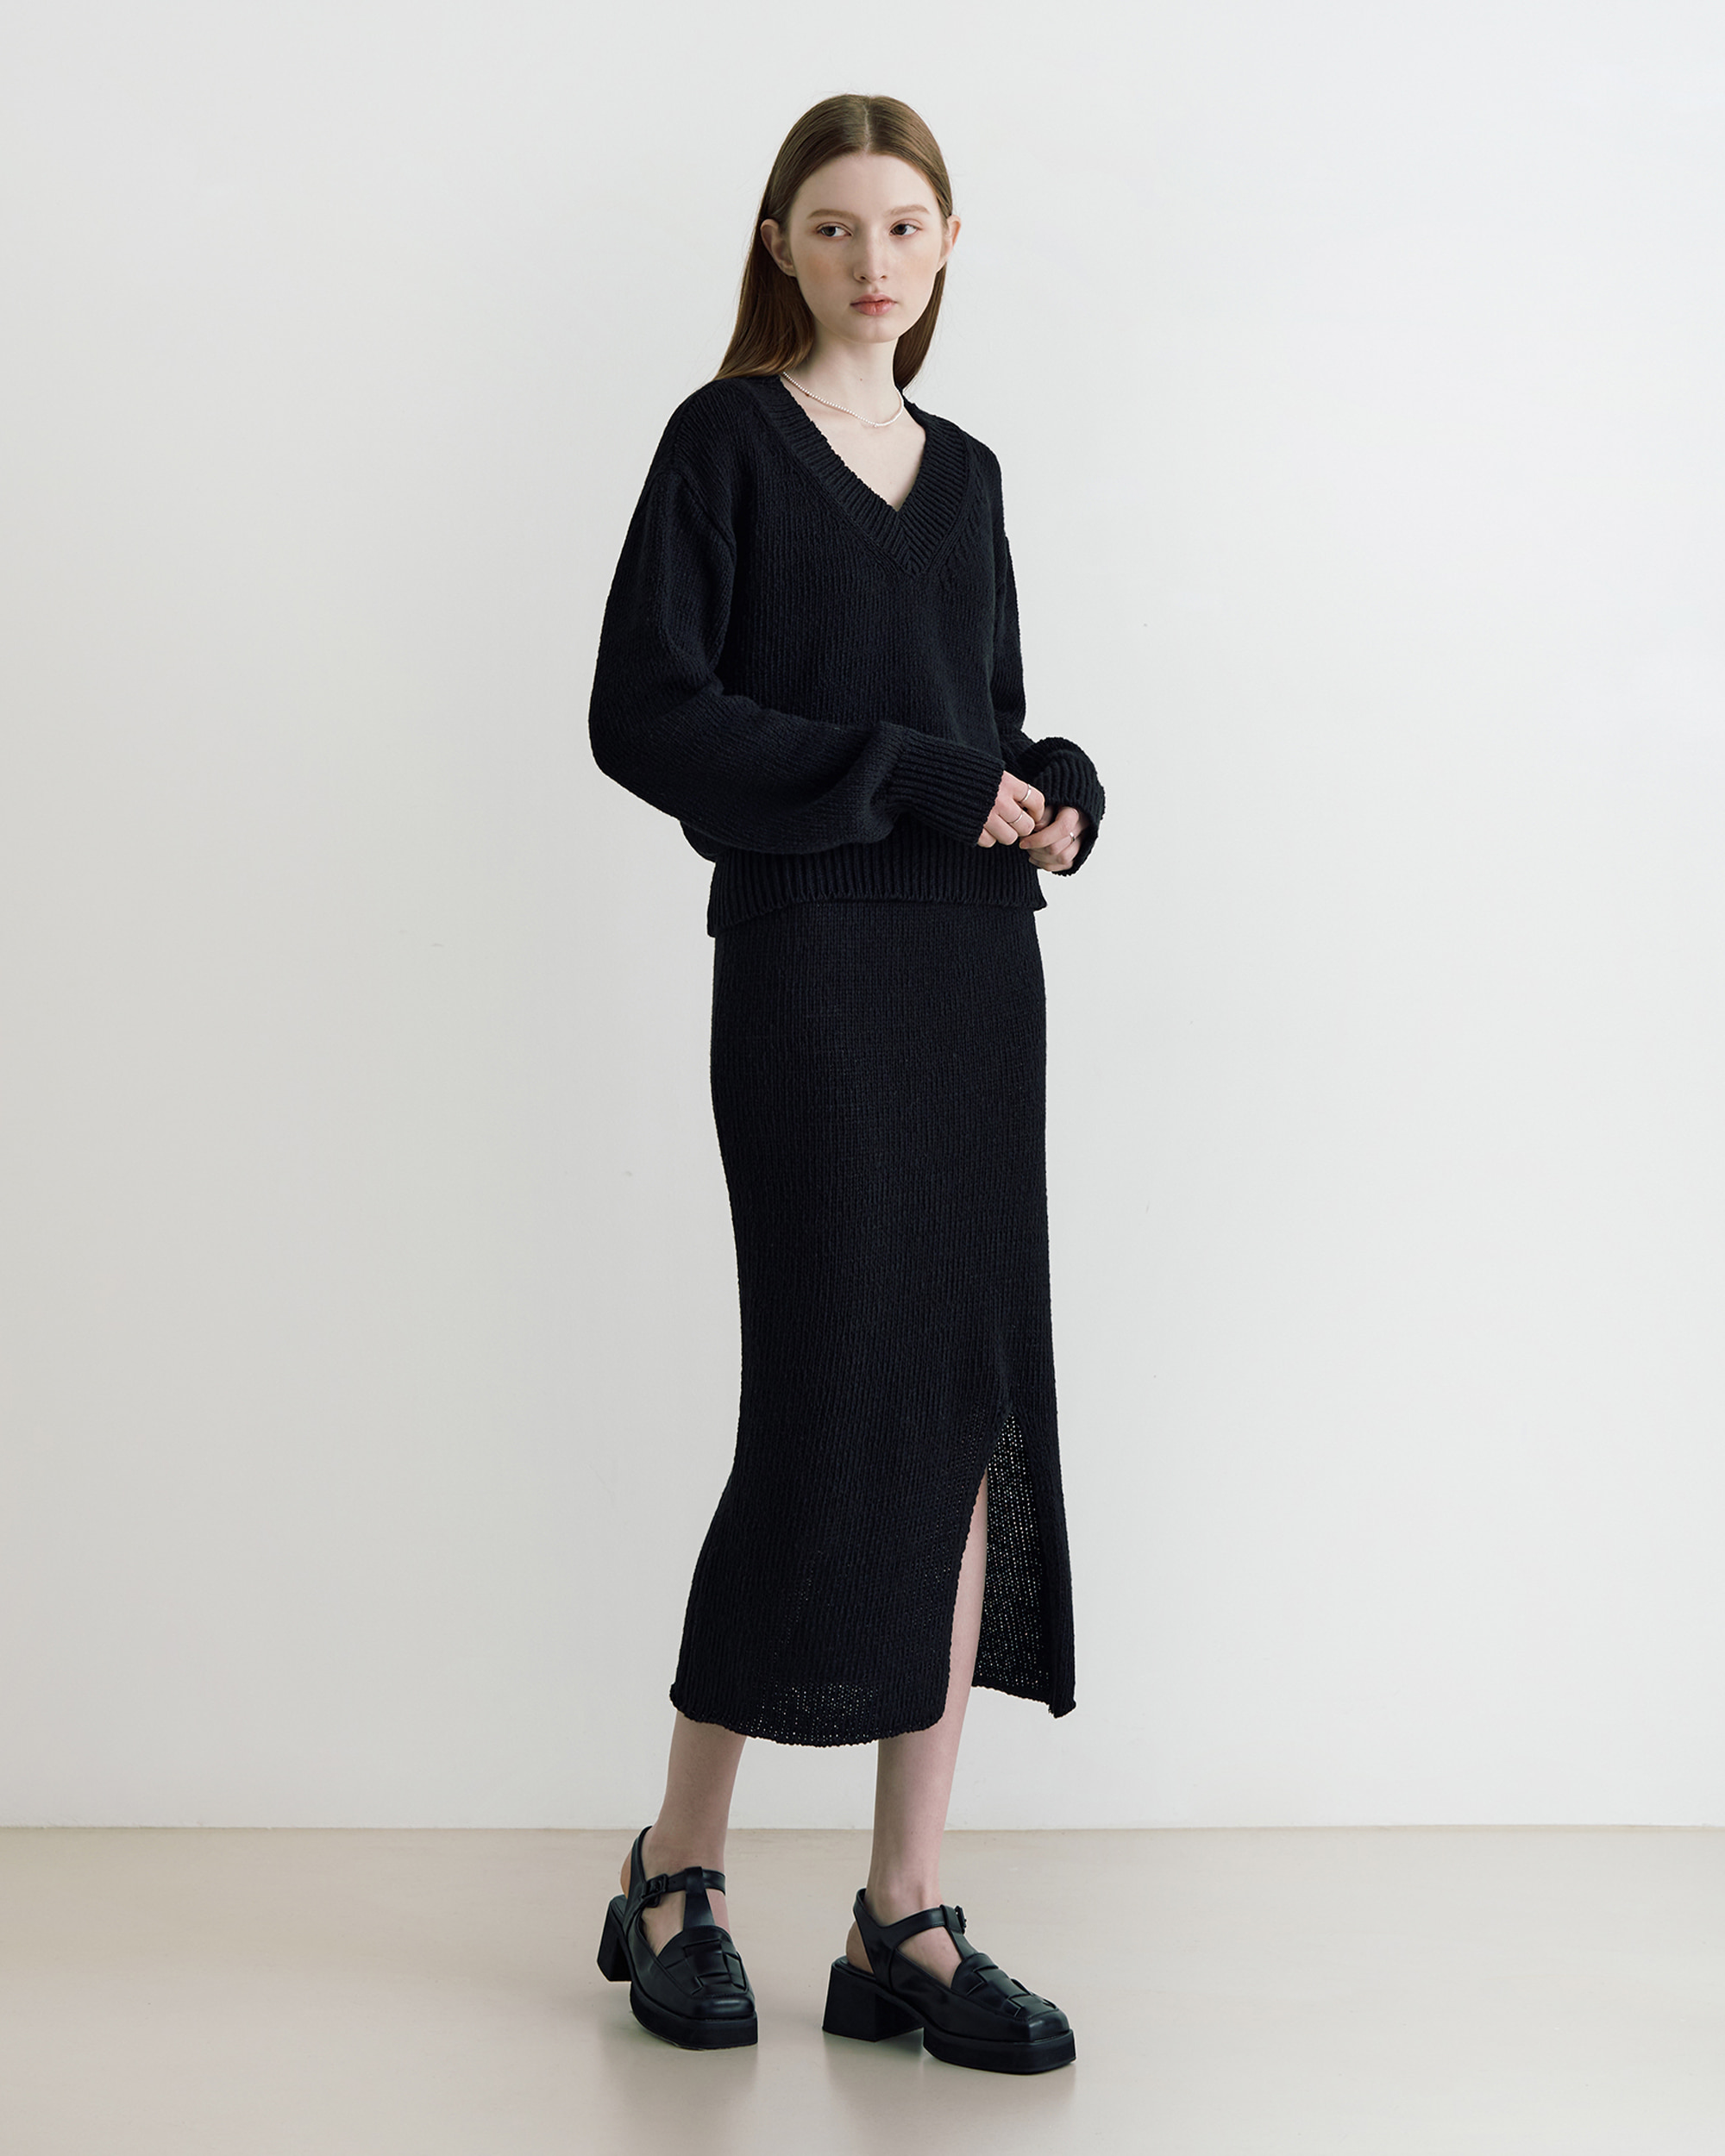 Snug daily knit dress set - black